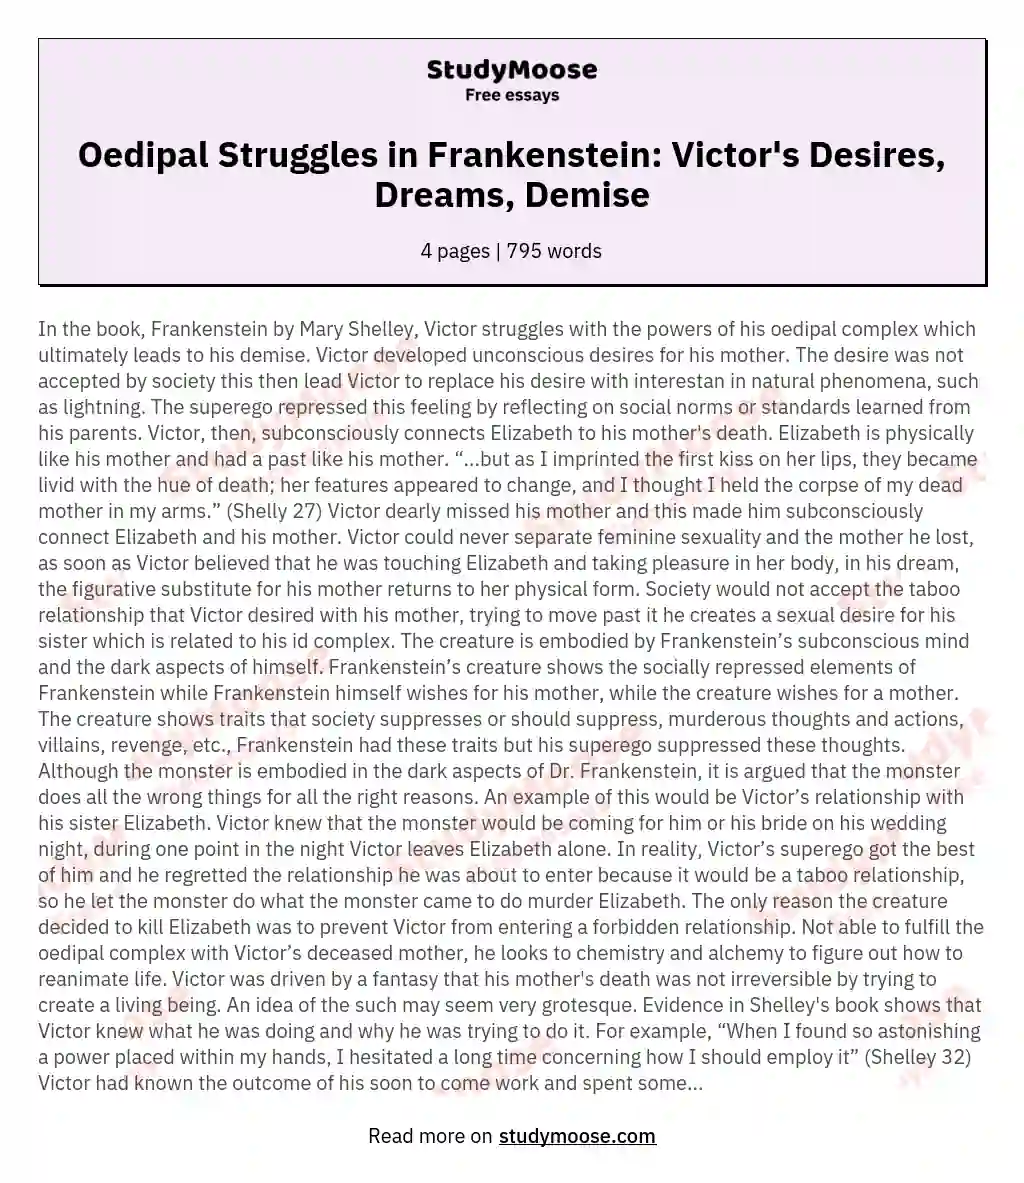 Oedipal Struggles in Frankenstein: Victor's Desires, Dreams, Demise essay